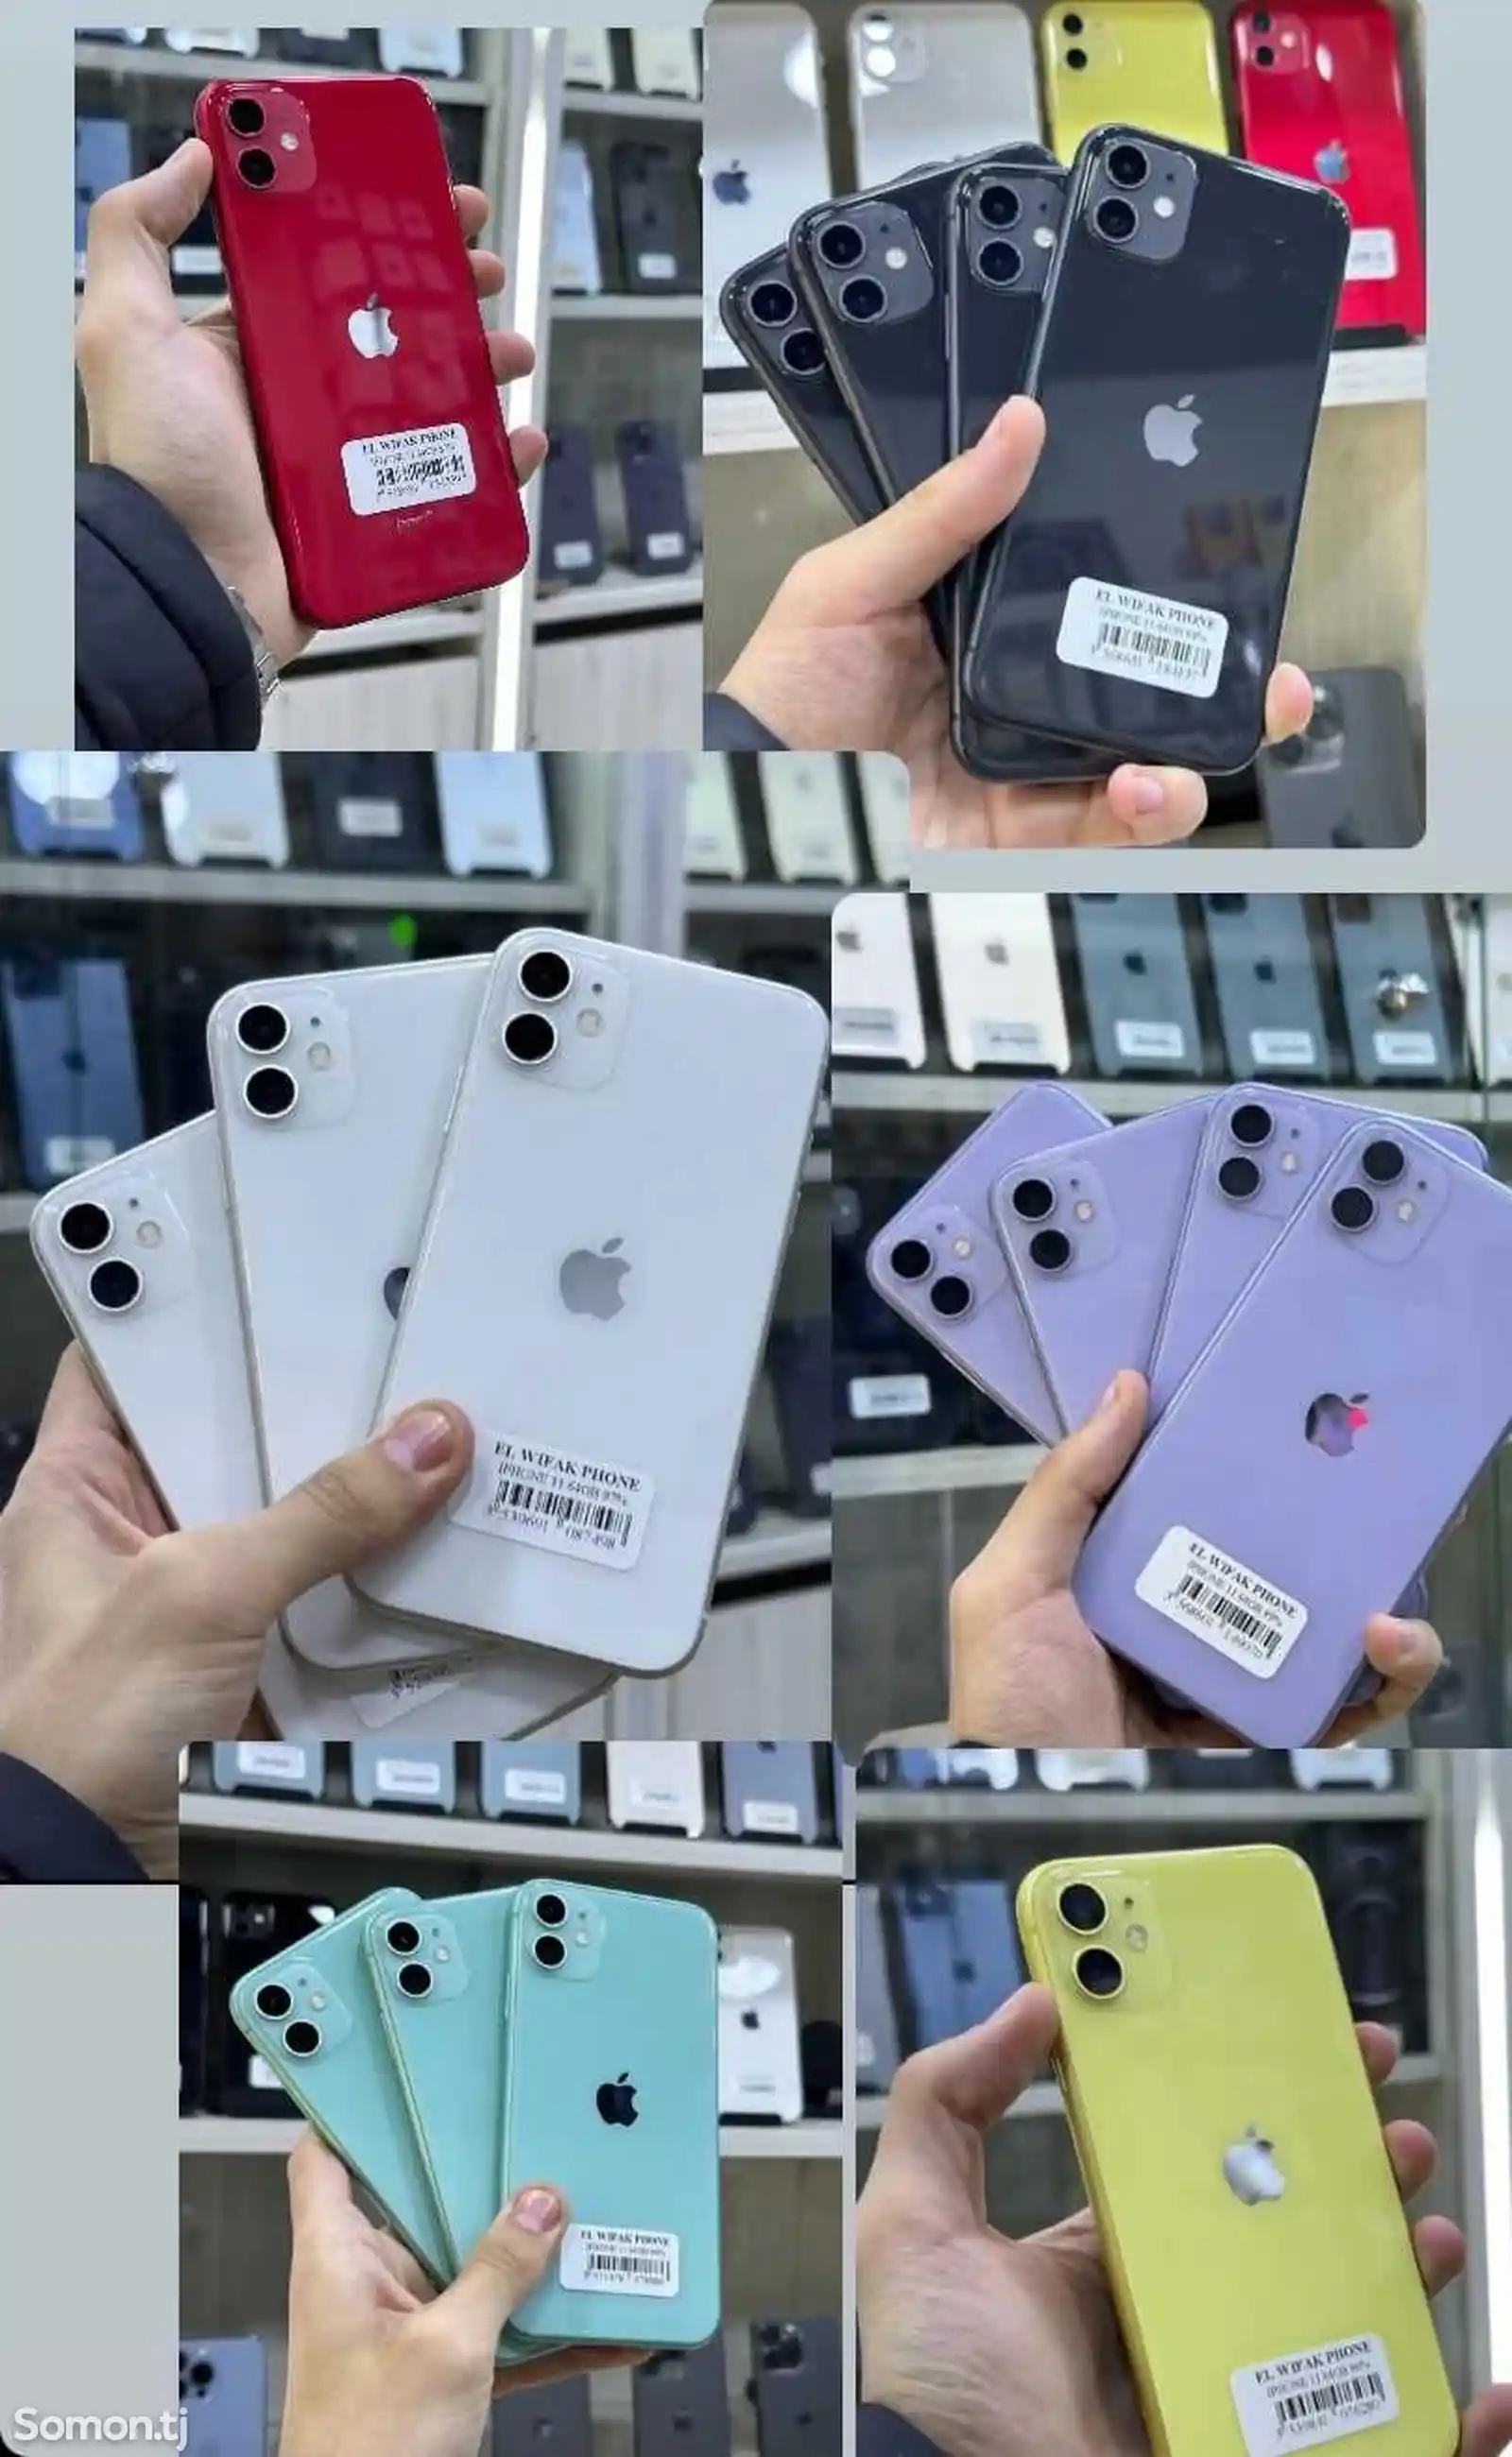 Apple iPhone 11, 128 gb, Purple